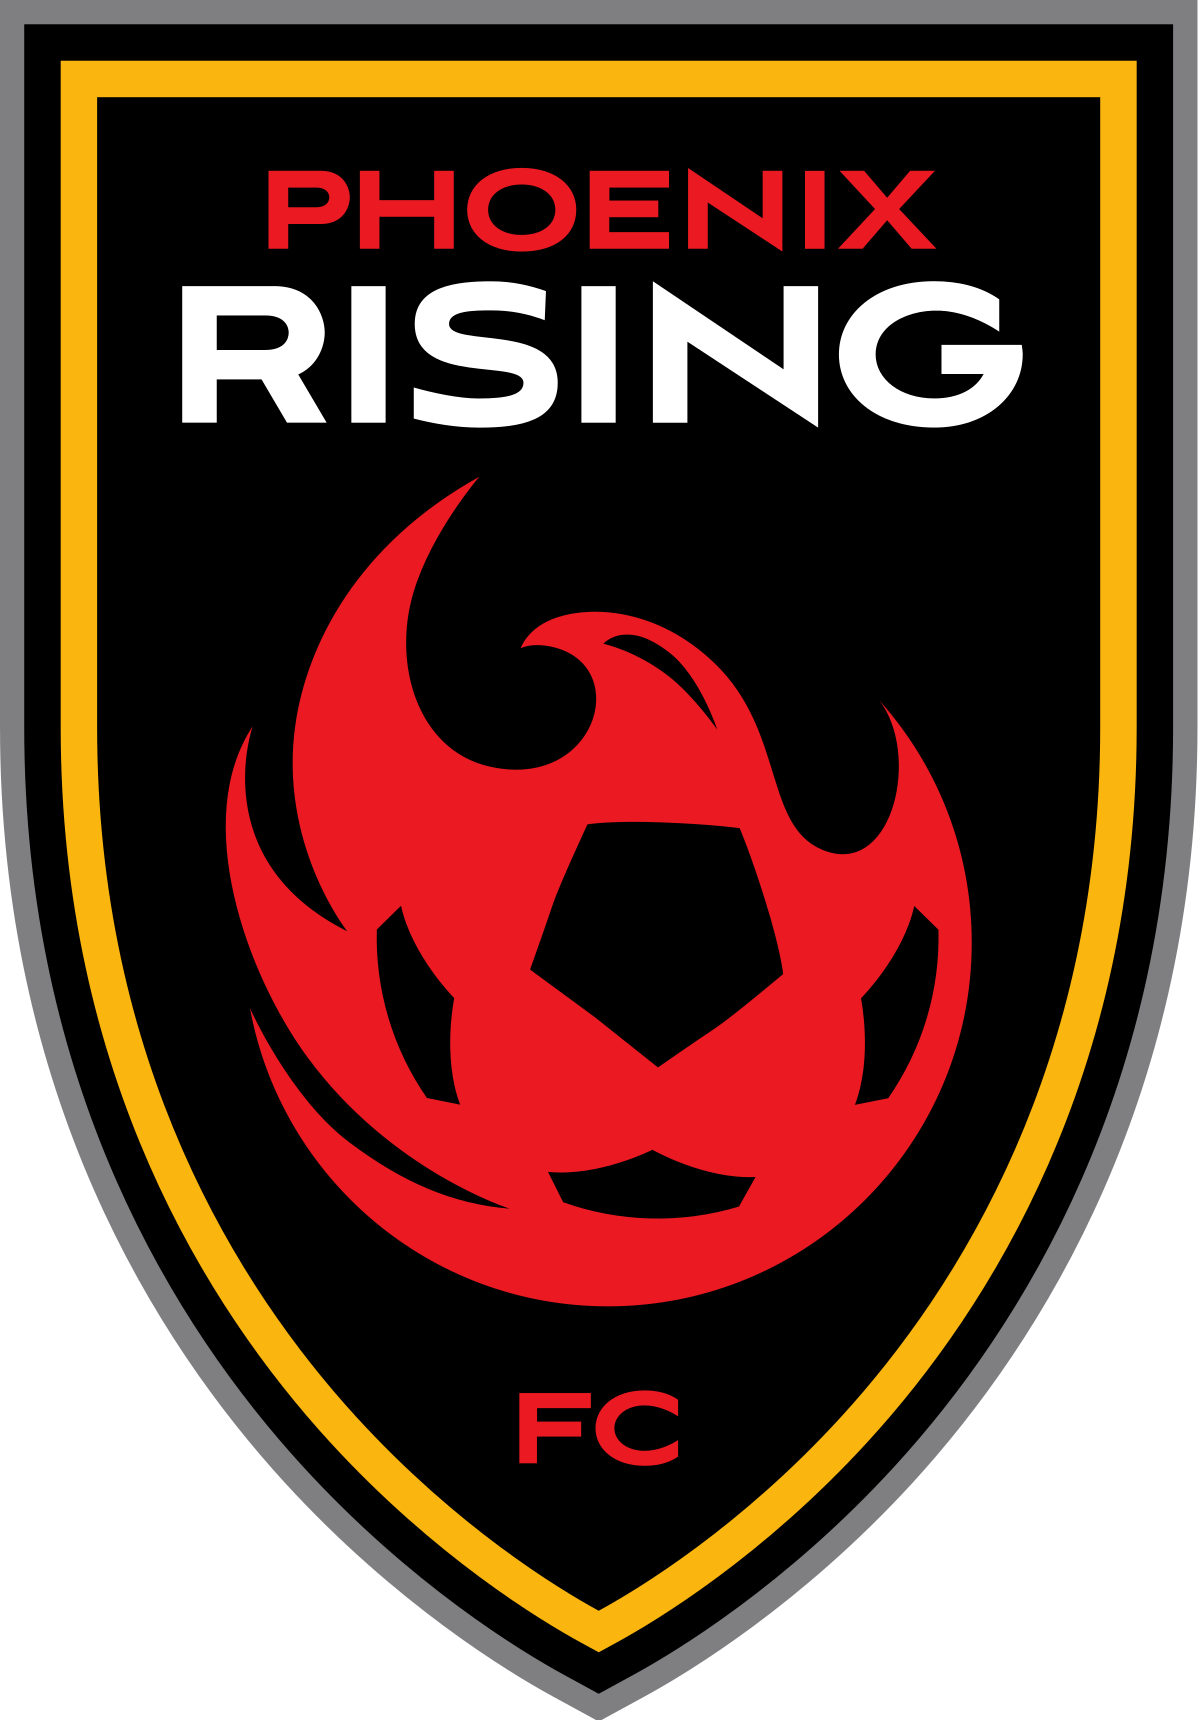 Phoenix Rising FC | Organizational Profile, Work & Jobs